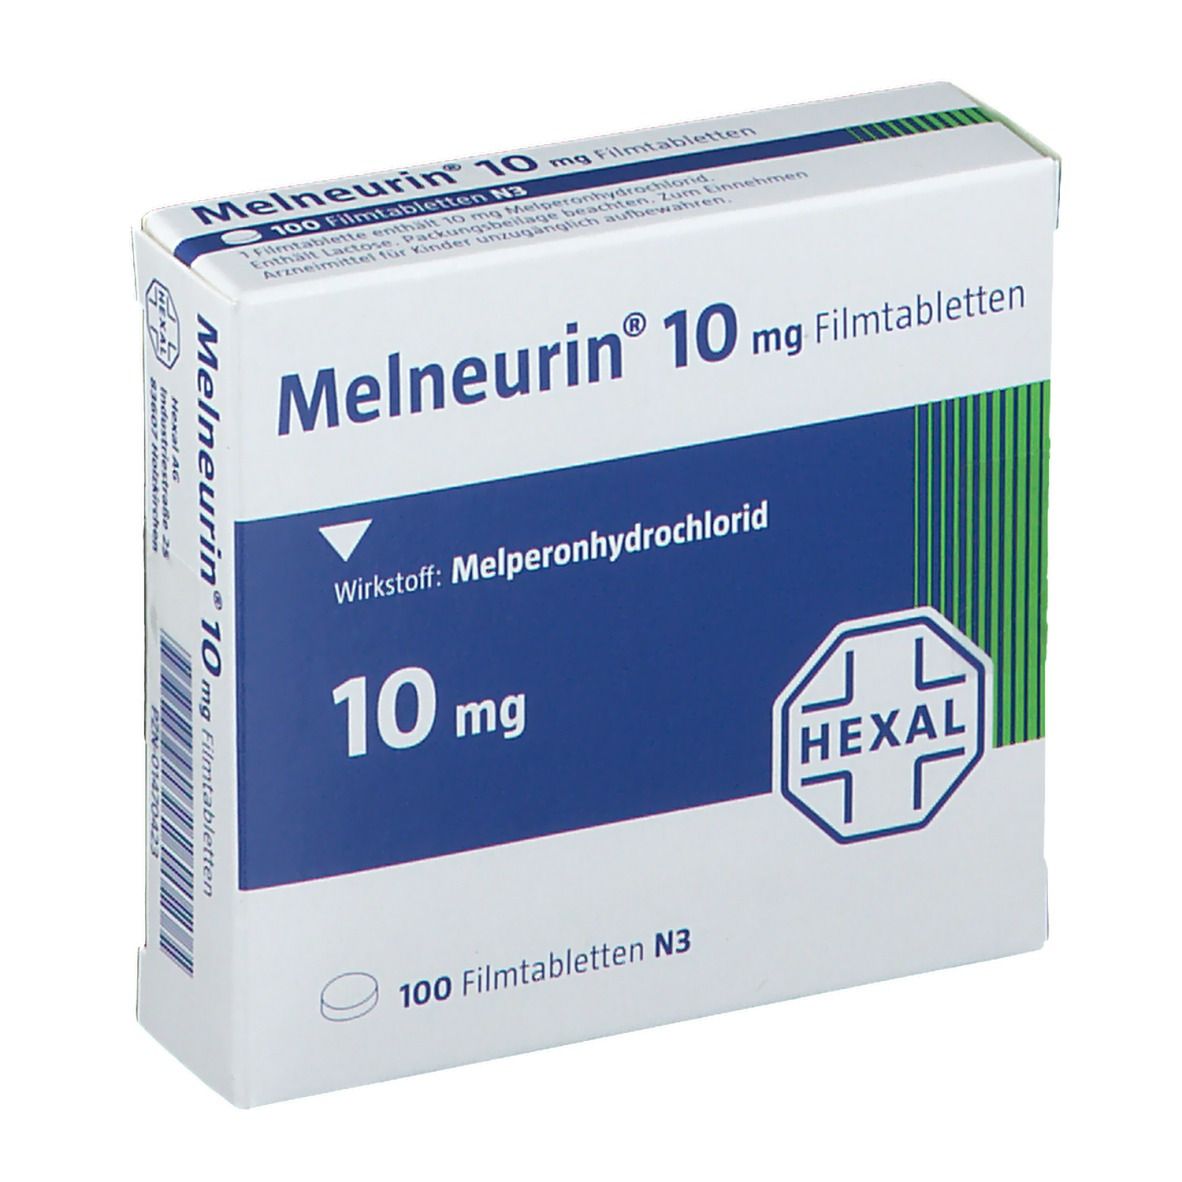 Melneurin® 10 mg